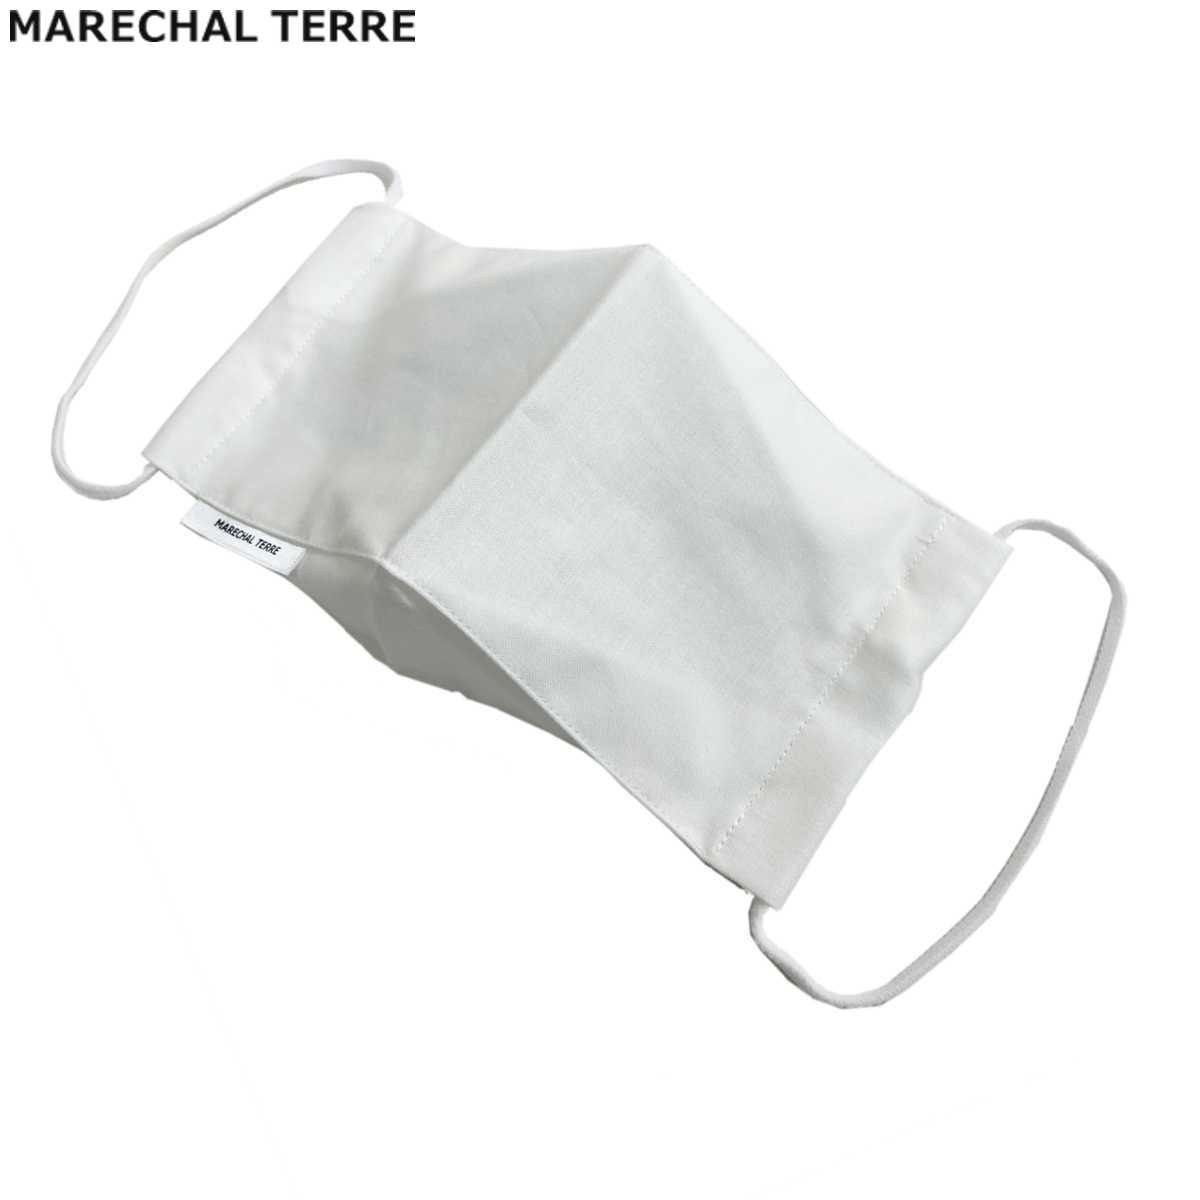 MARECHAL TERRE(マルシャルテル) 洗えるマスク 立体布マスク メンズサイズ ファッションマスク 大人用 ホワイト 日本製 フリーサイズ 春 夏 マスク